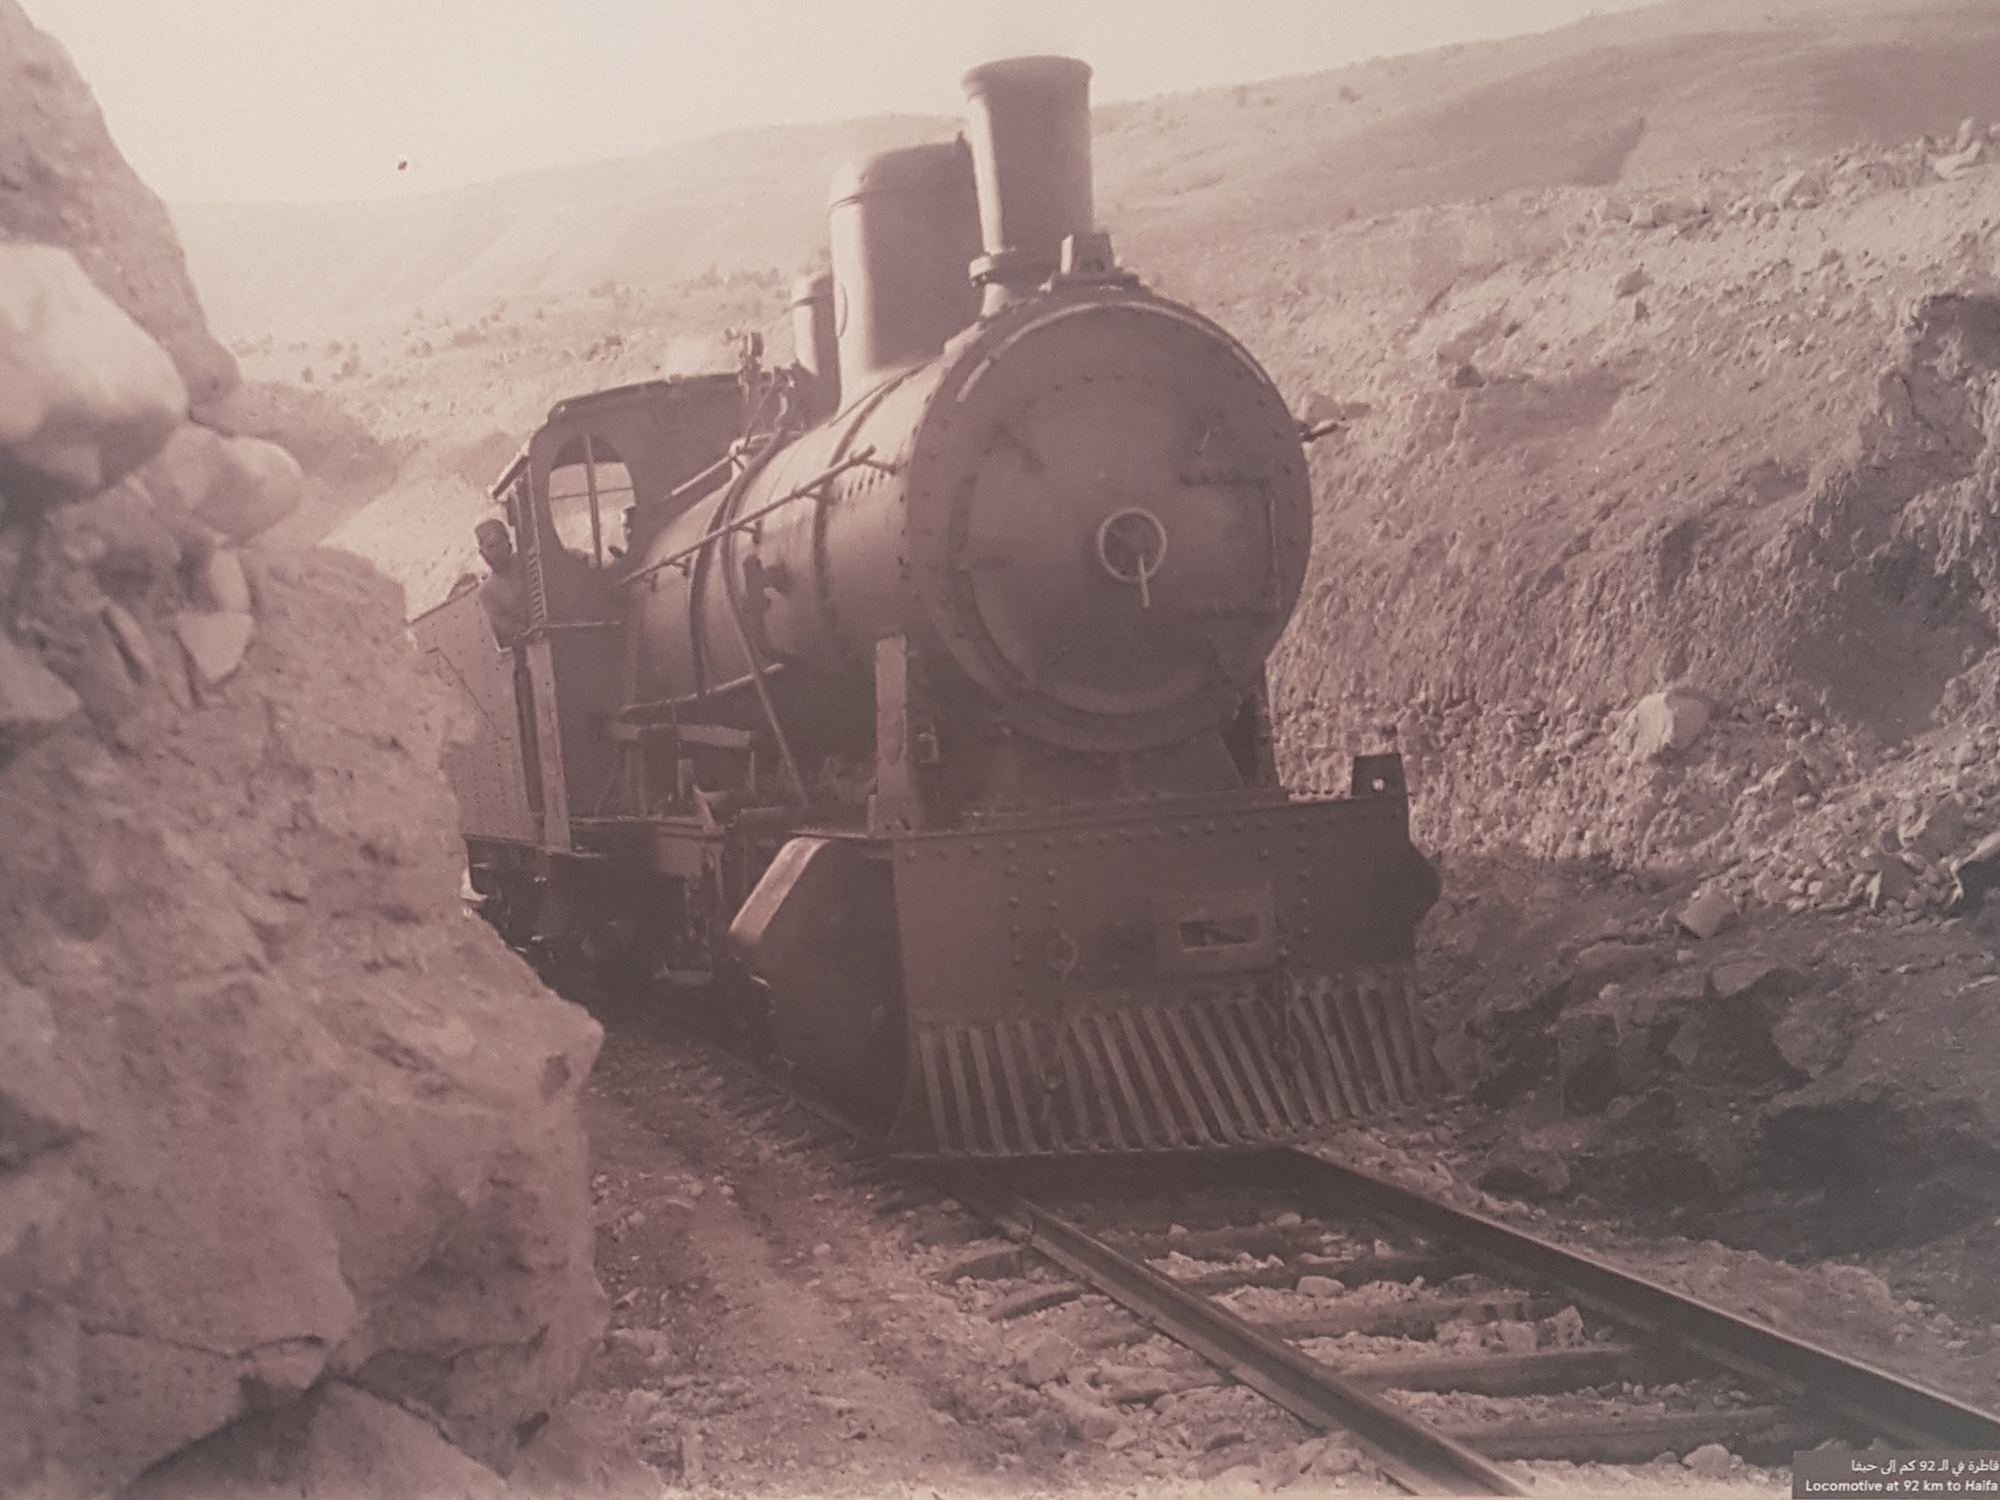 Photos from the amazing Hejaz Railway, connecting Ottoman Istanbul to Medina